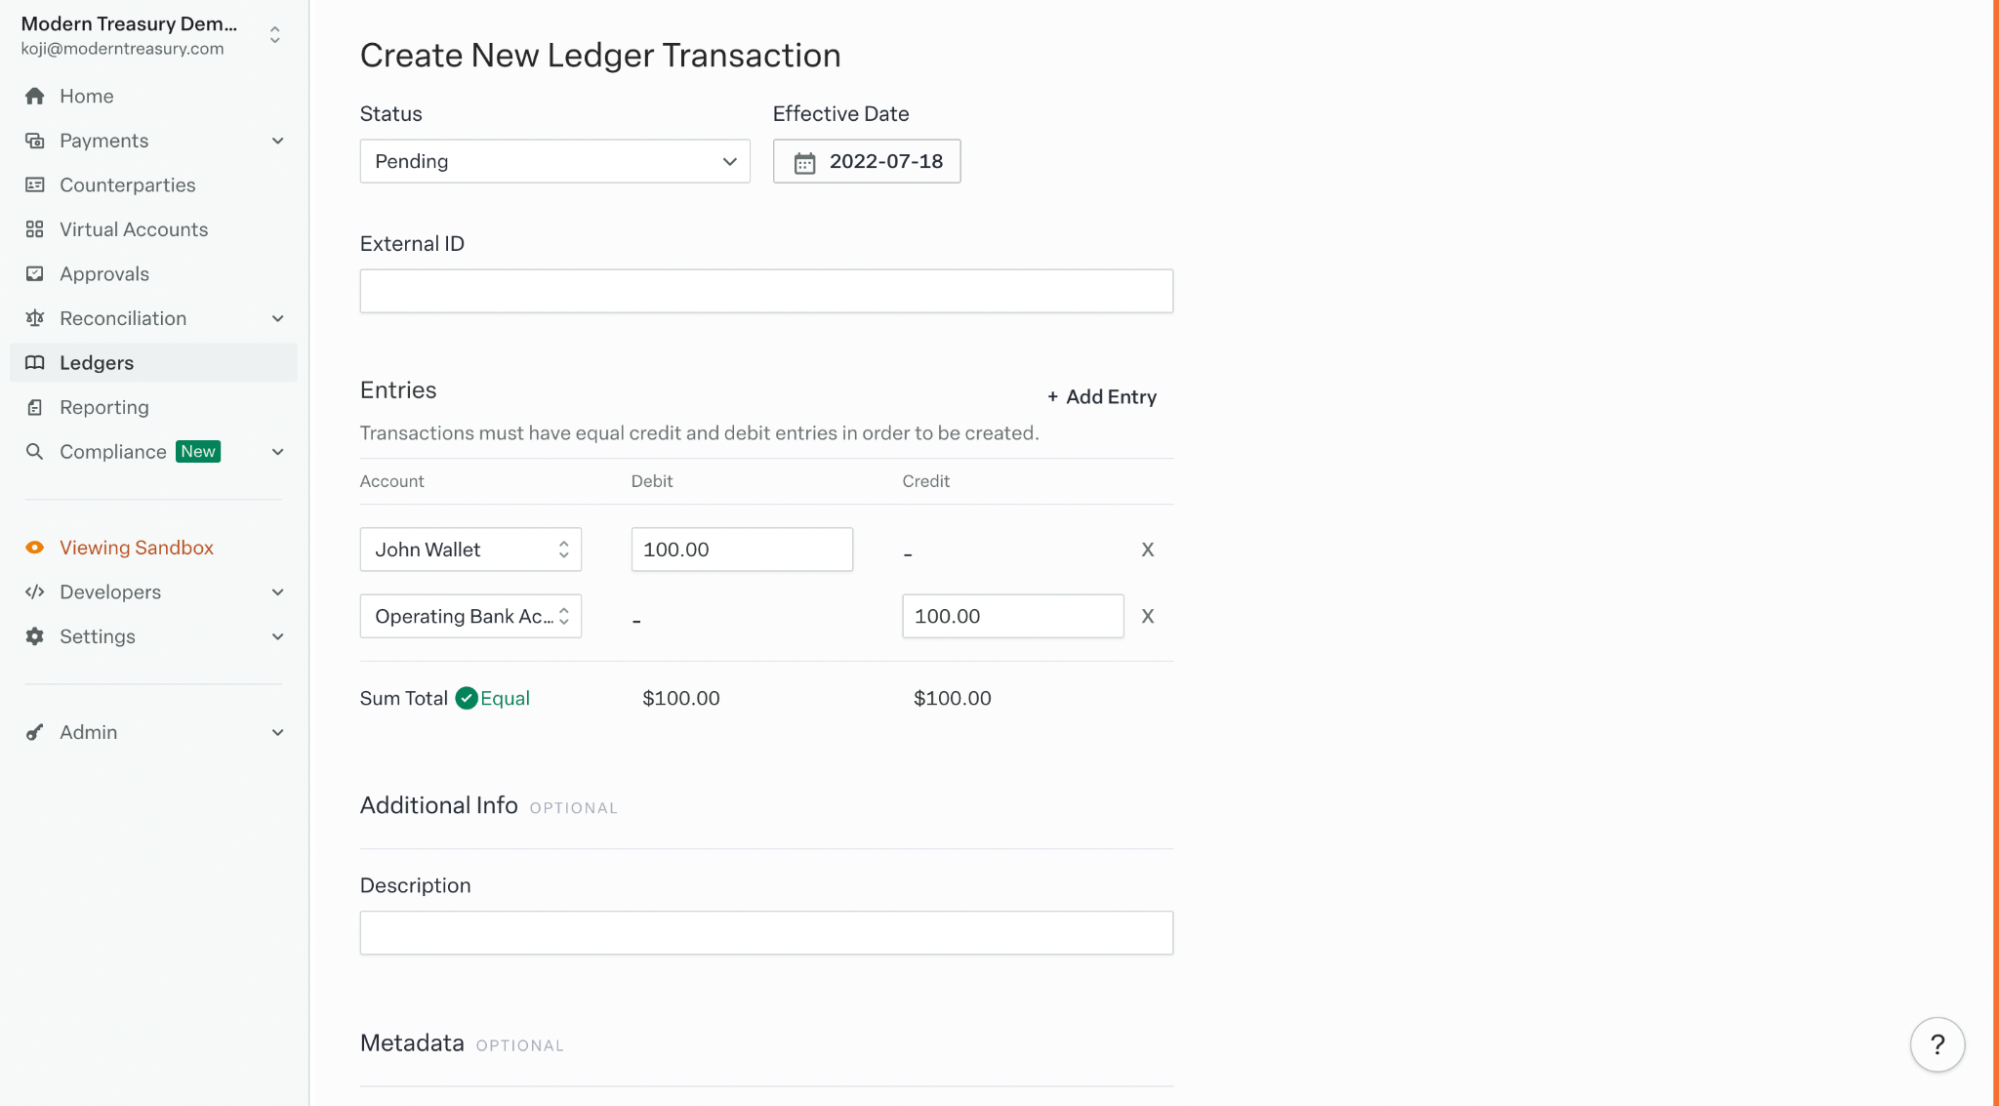 Image of Modern Treasury's create new ledger transaction screen